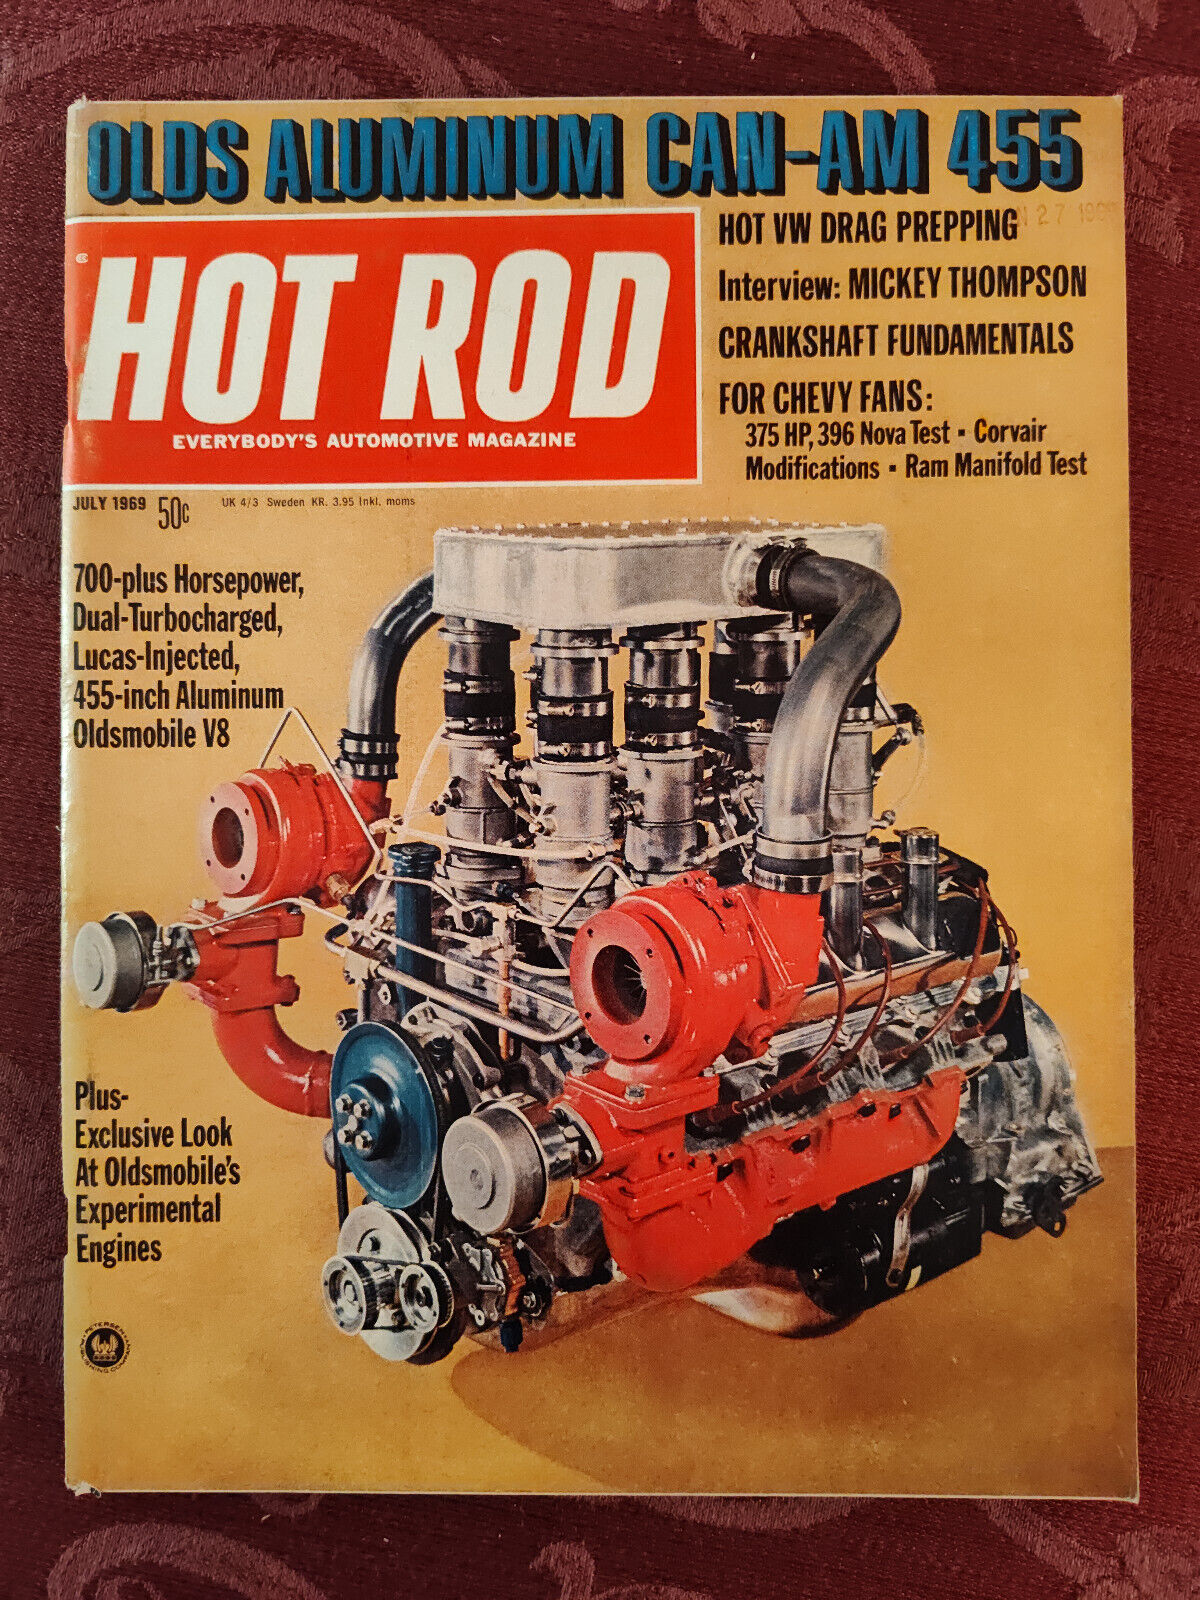 Rare HOT ROD Car Magazine July 1969 Oldsmobile Can Am 455 VW Drag Prep